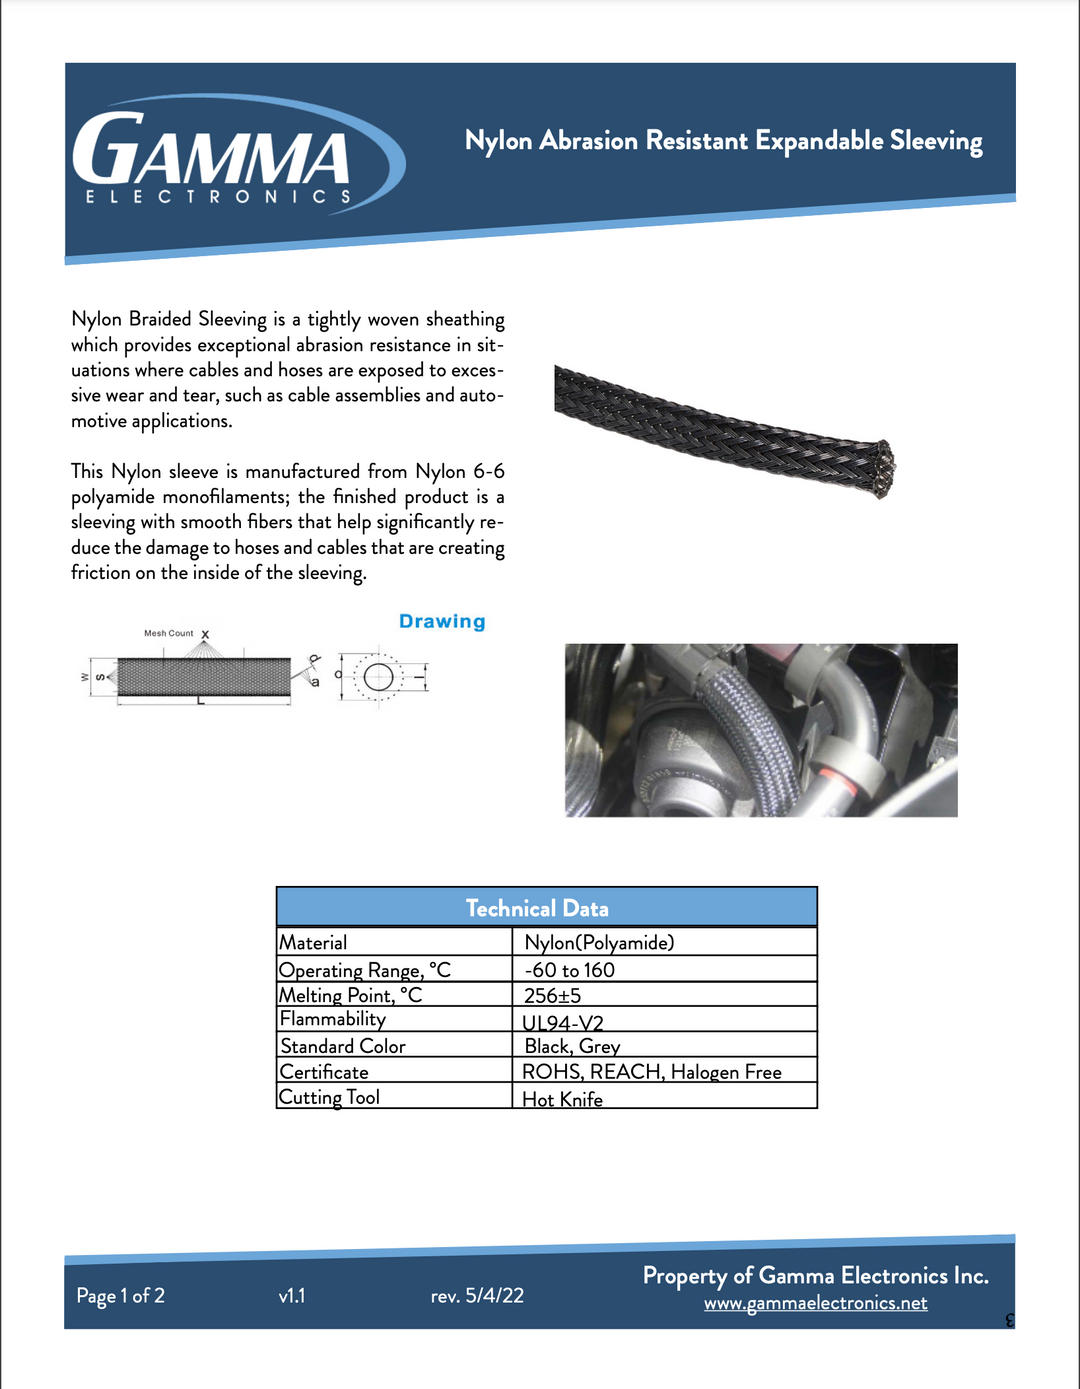 Gamma Braided Nylon Abrasion Resistant Expandable Sleeving - Gamma Electronics